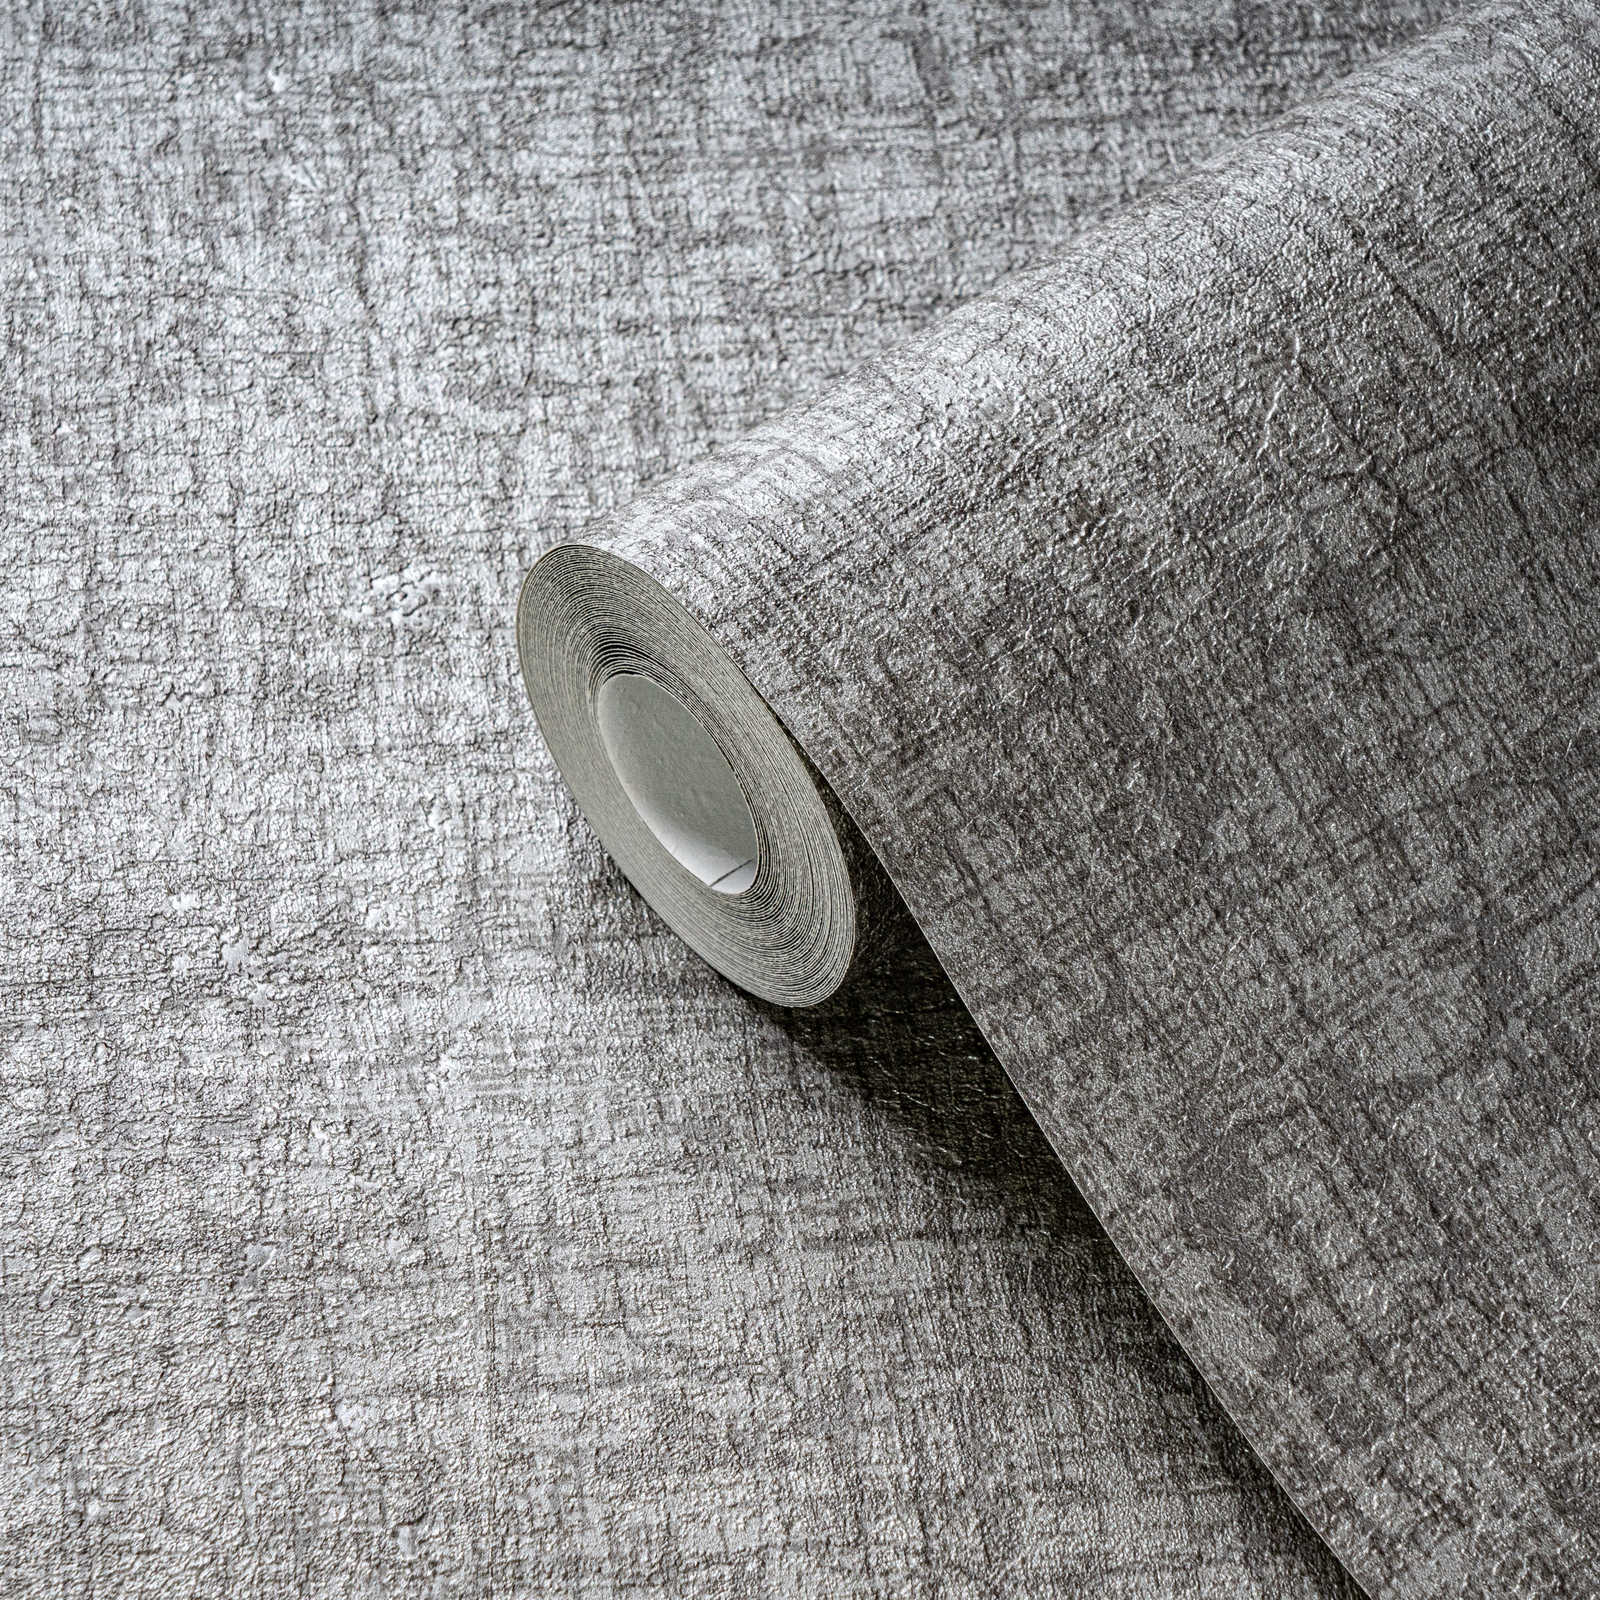             Vliestapete mit Struktur in Textiloptik – Grau, Dunkelgrau
        